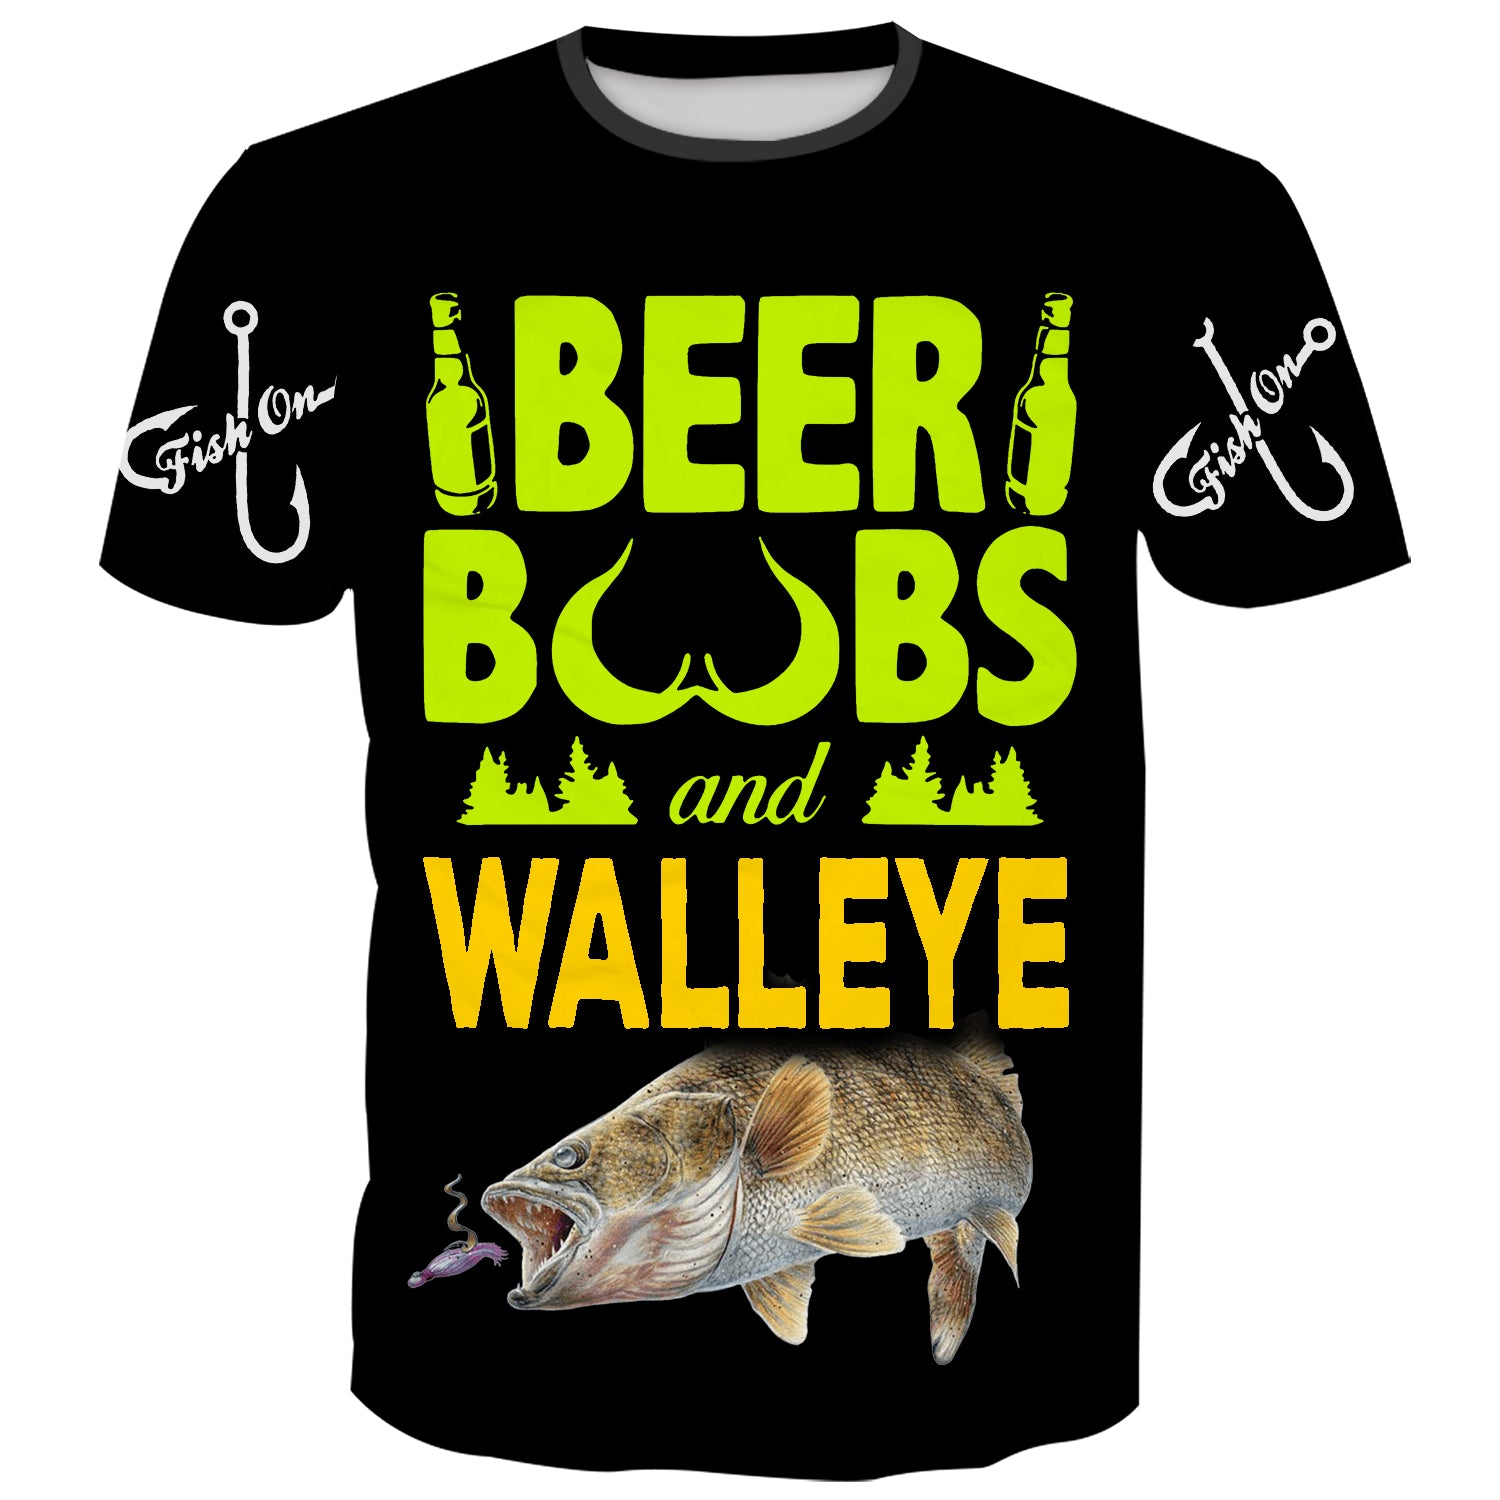 Beer, Boobs and Walleye - T-Shirt